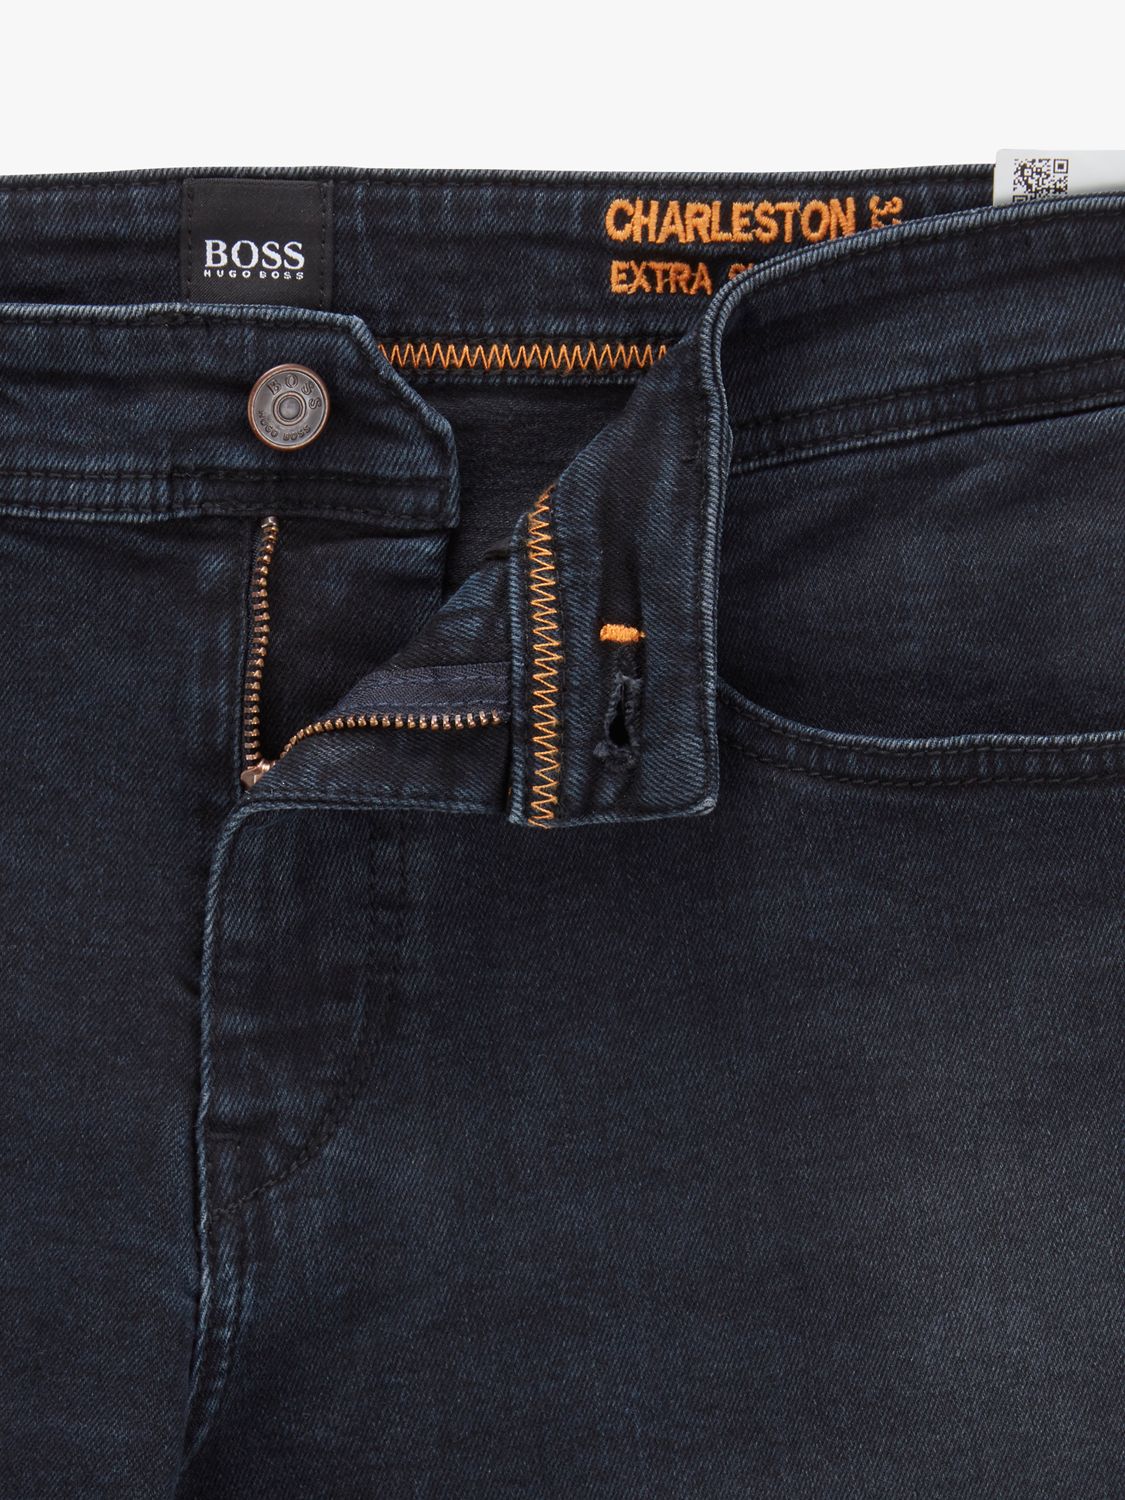 boss charleston jeans